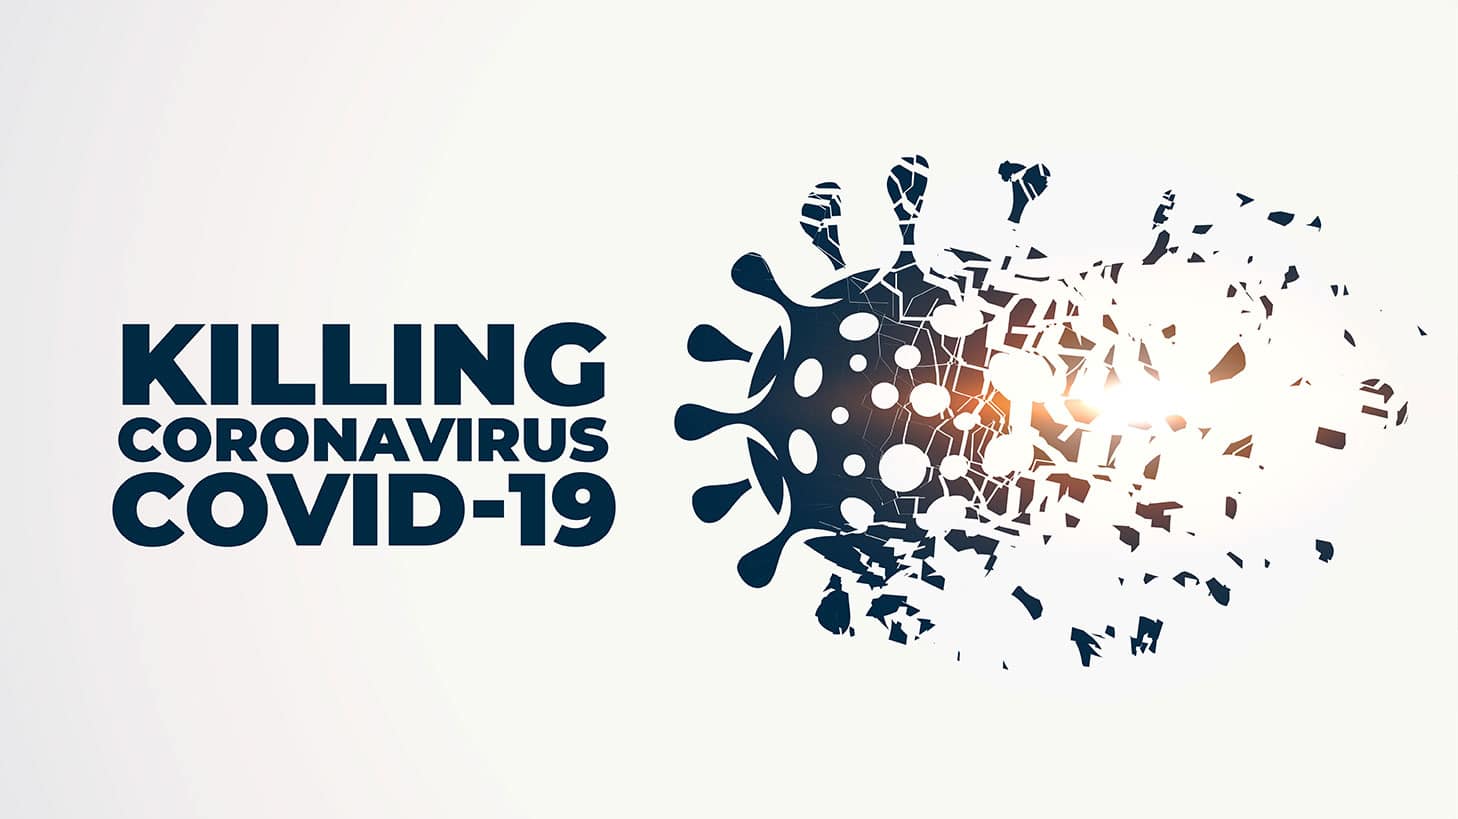 وکتور ویروس کرونا covid-19